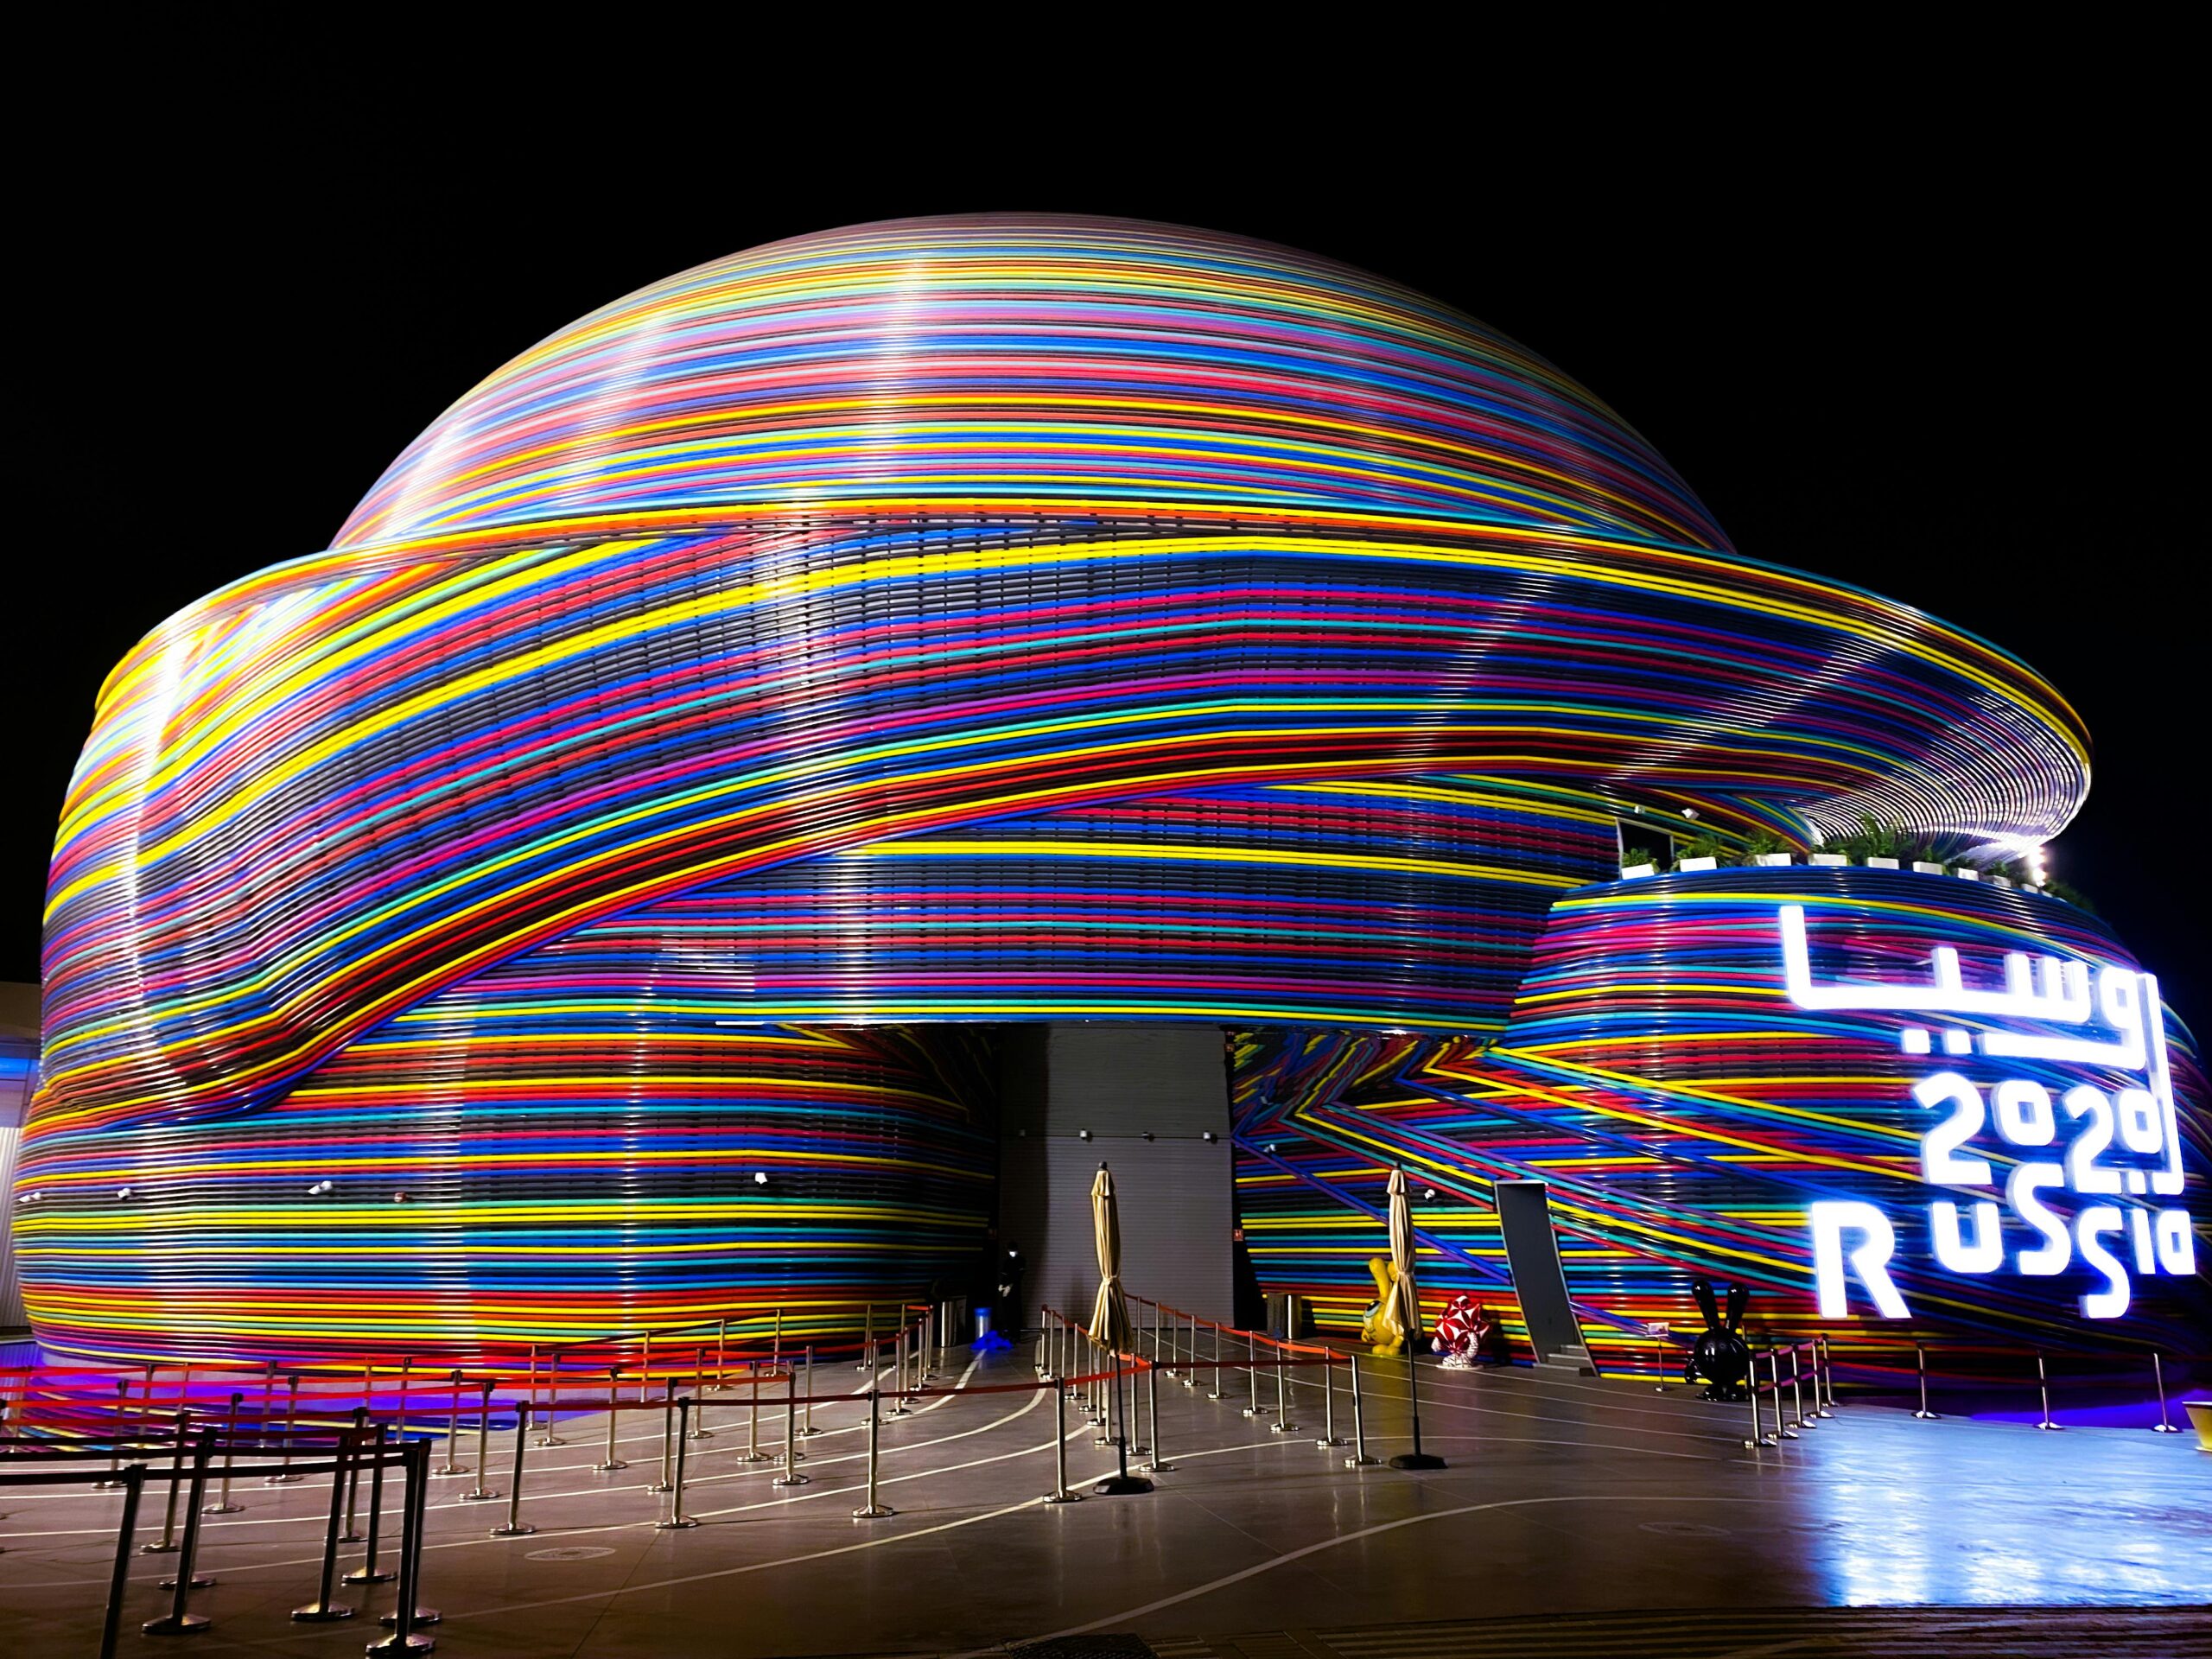 Russian pavilion at Expo 2020 Dubai